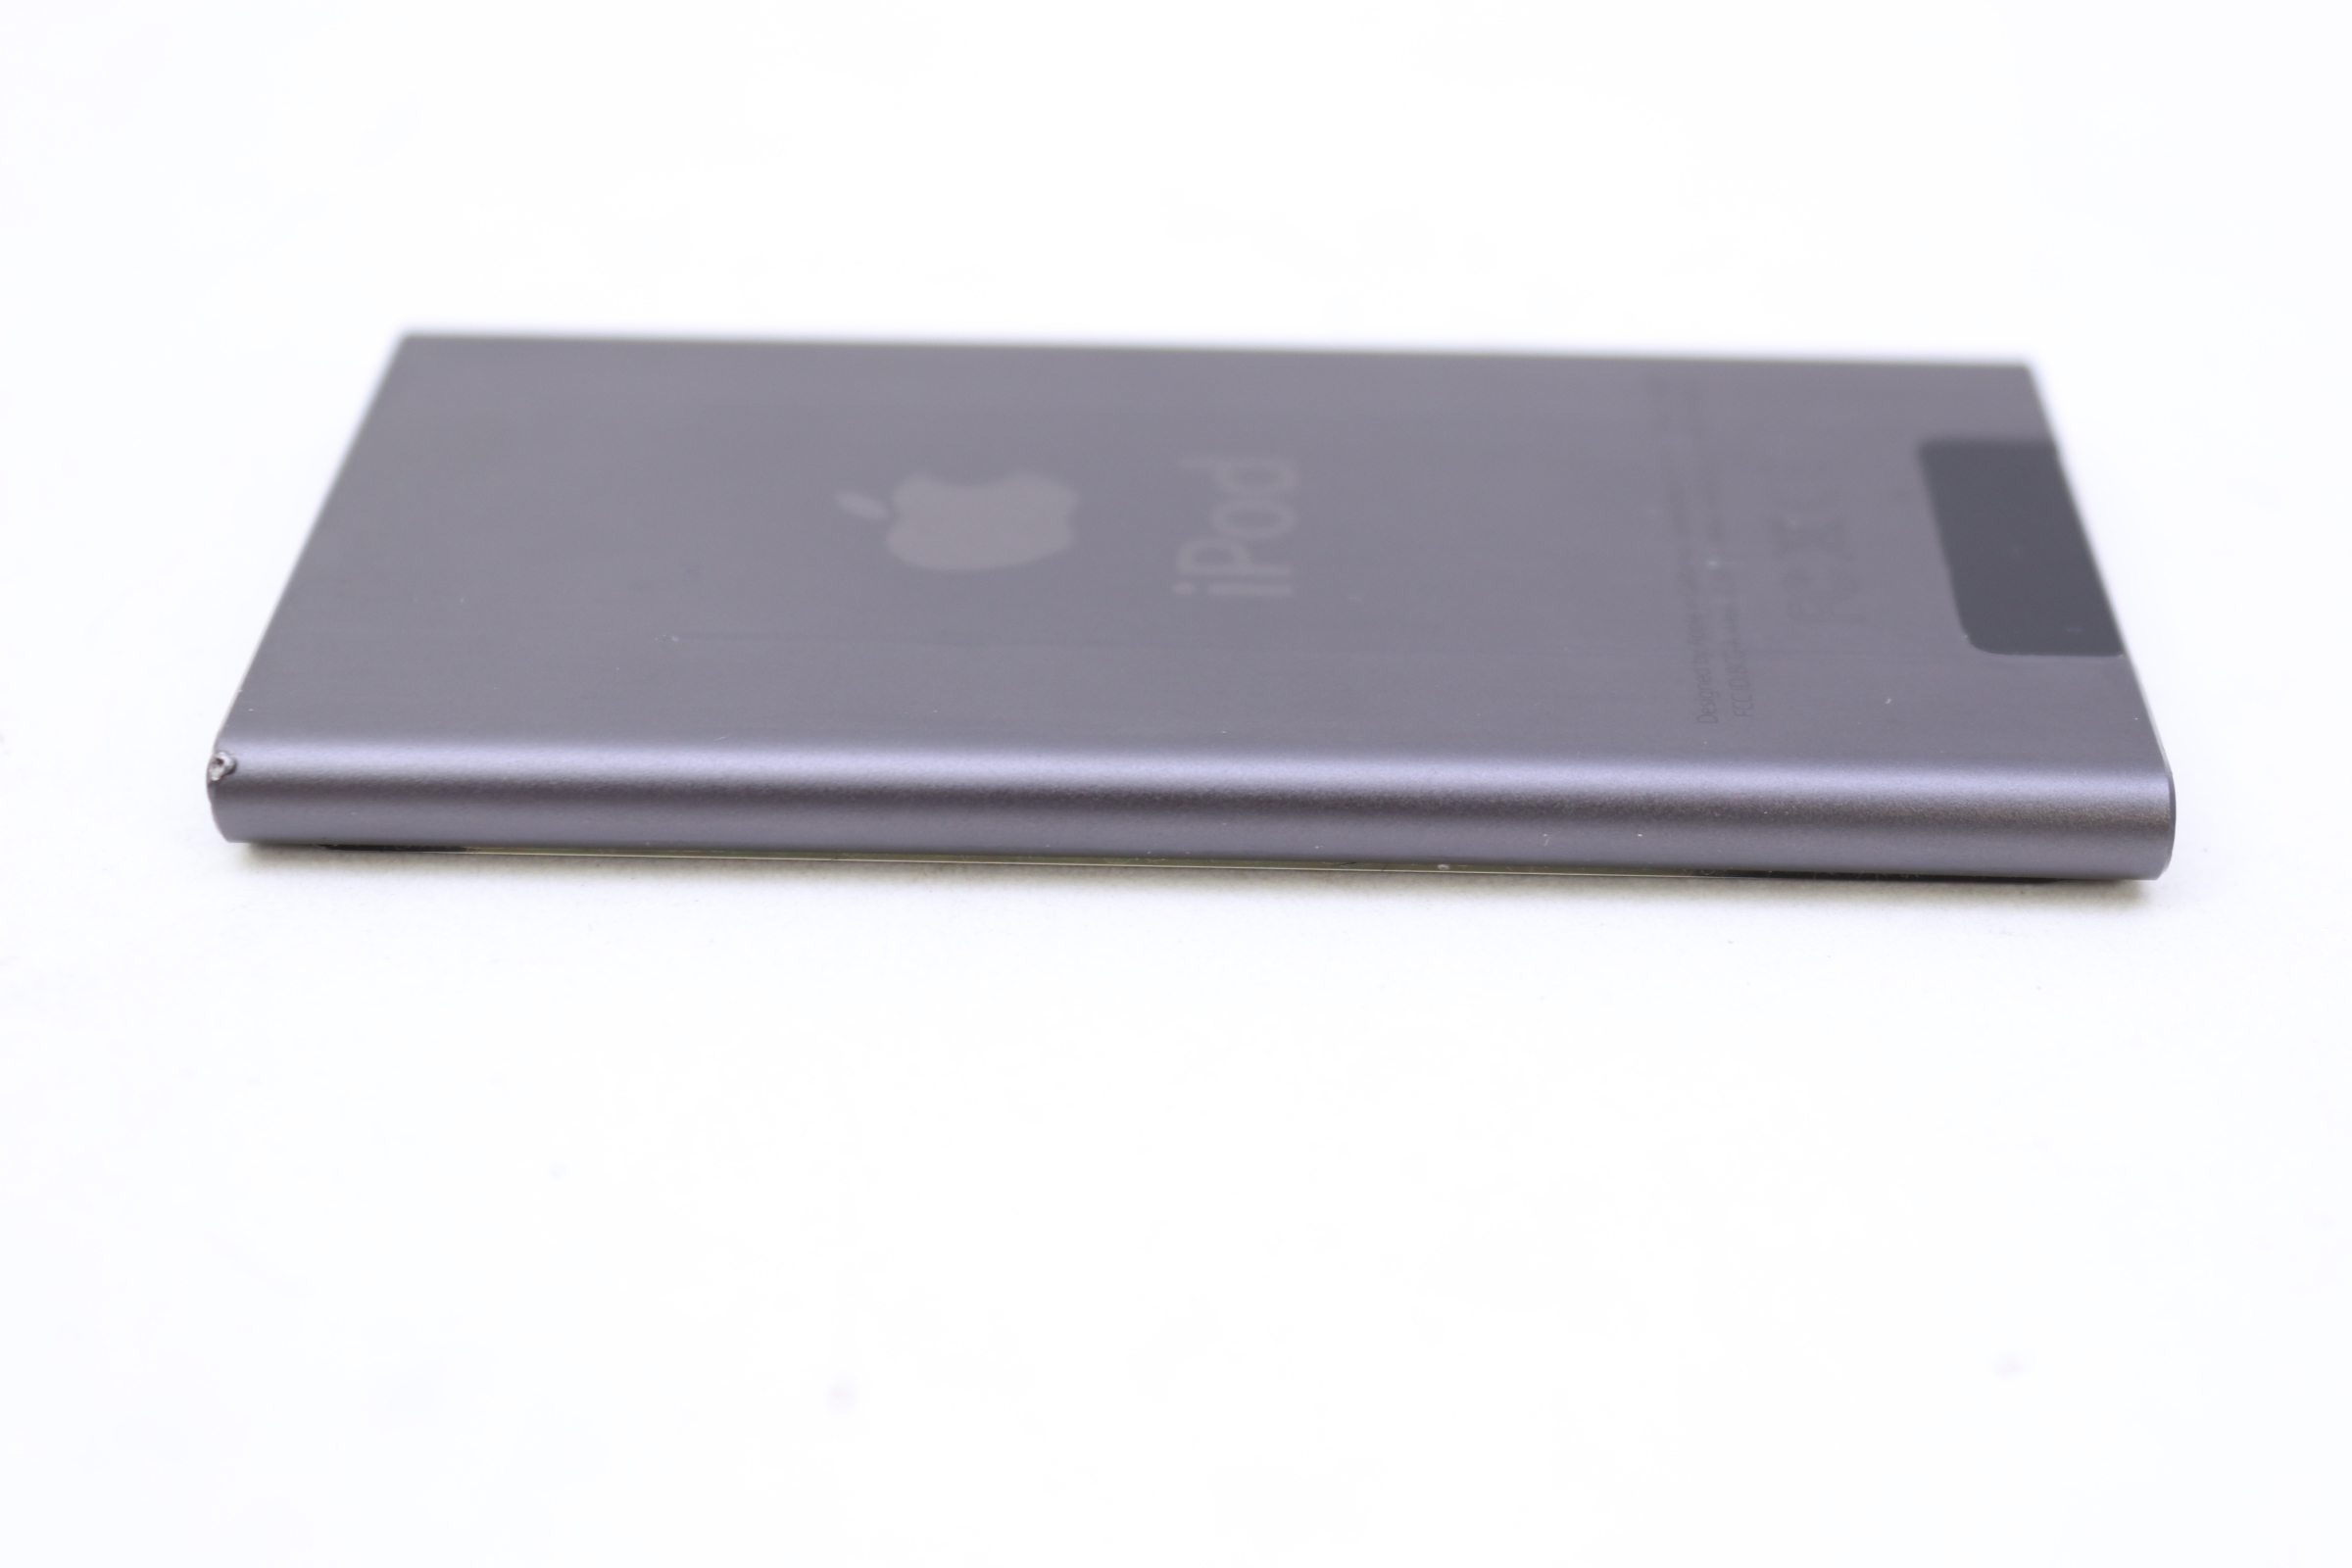 Apple iPod nano 16GB (Space Gray) 